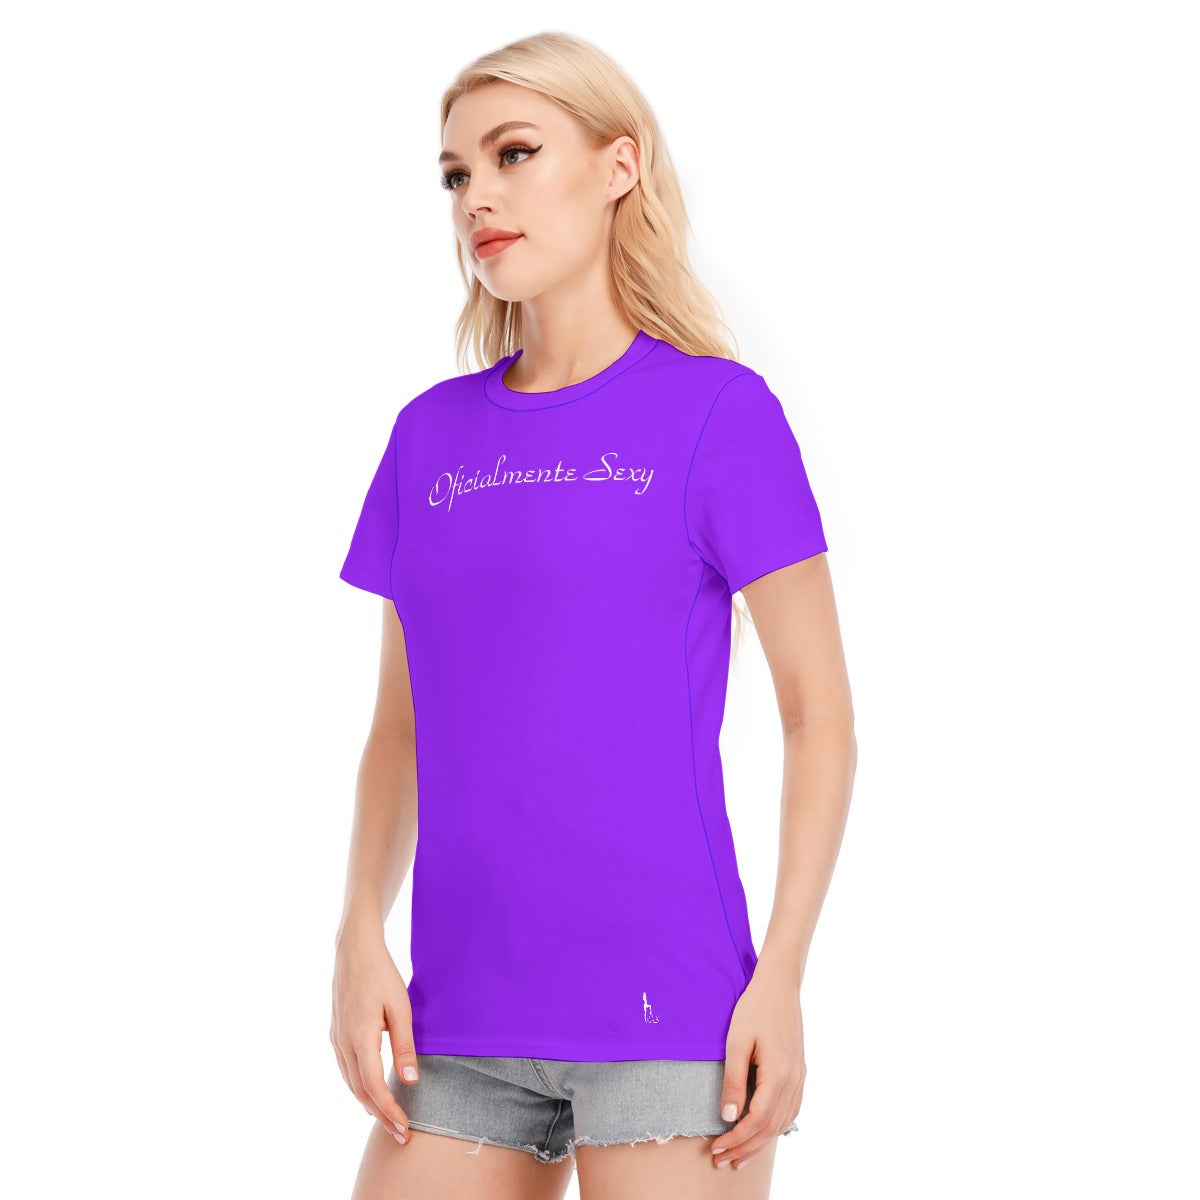 👚 Oficialmente Sexy Colors Collection Blue Violet With White Women's Round Neck T-Shirt | 190GSM Cotton Color #9013FE 👚